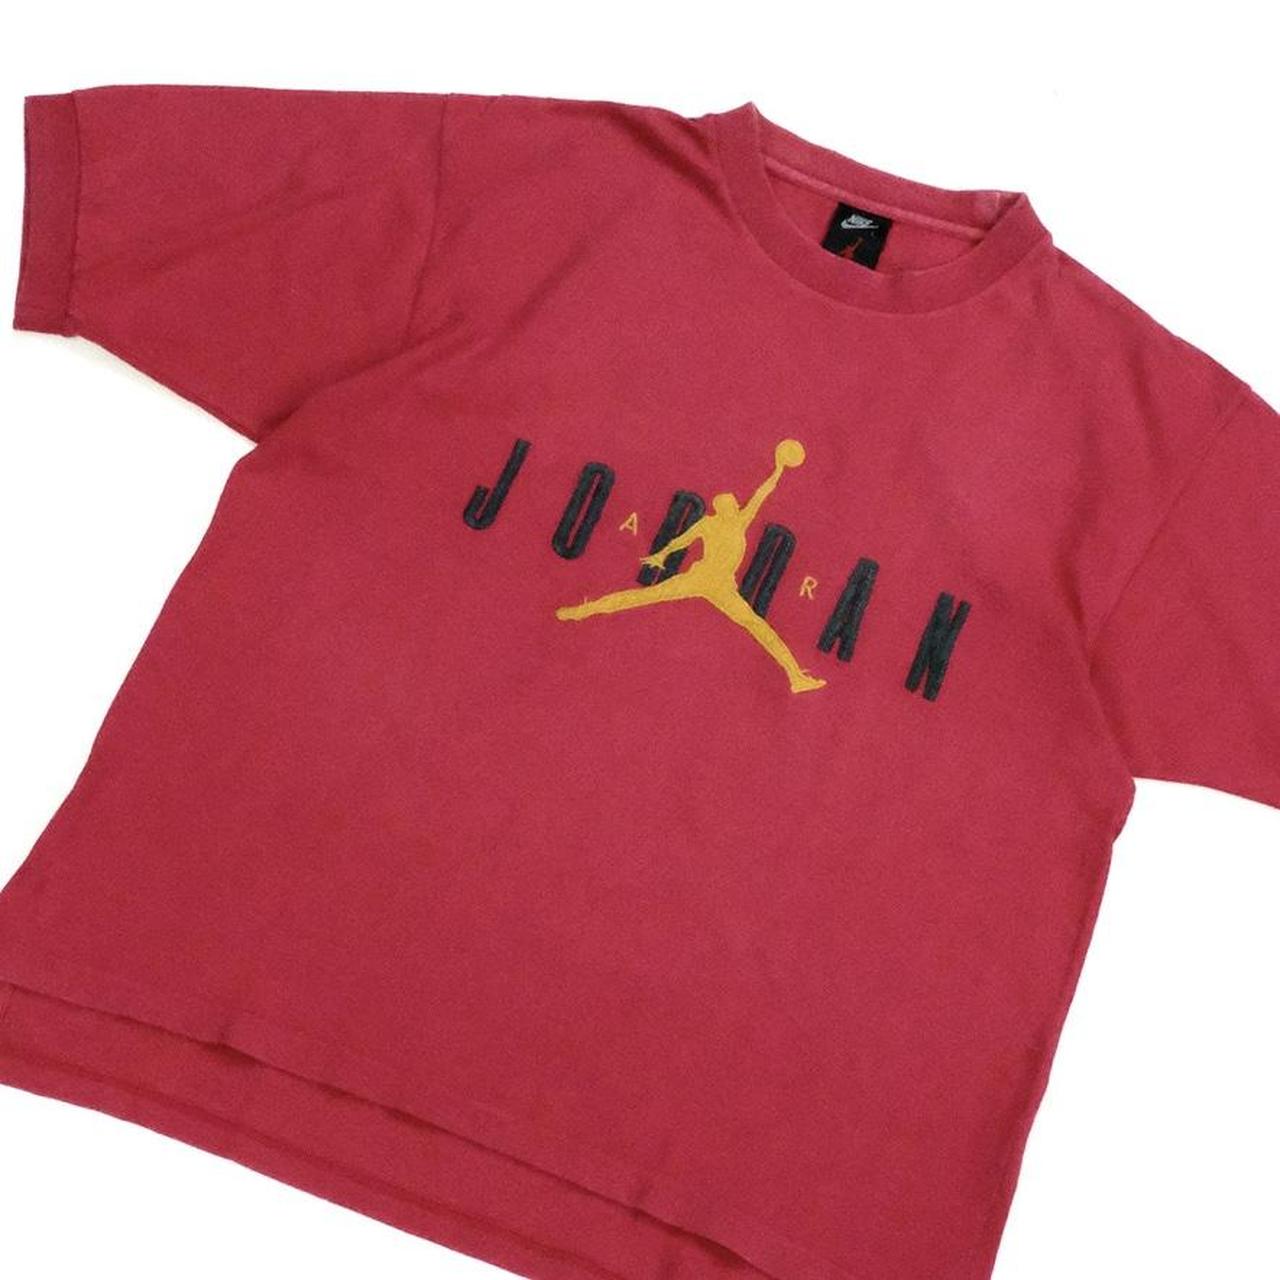 Vintage Nike Air Jordan t-shirt